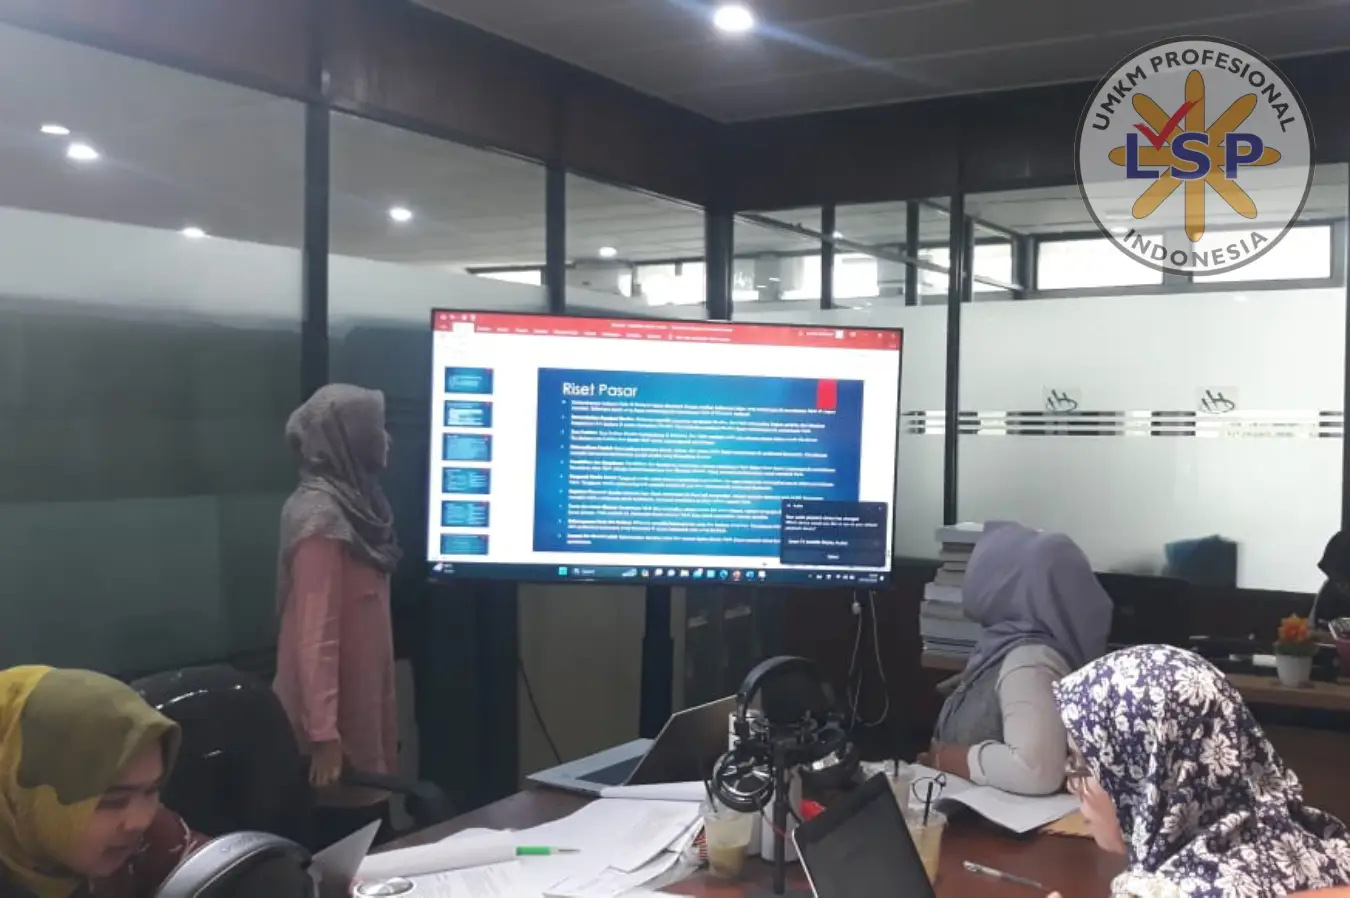 Pelaksanaan Uji Kompetensi dengan skema Pengembangan Ekspor Melalui Media Online 15 November 2023 Universitas Sumatera Utara